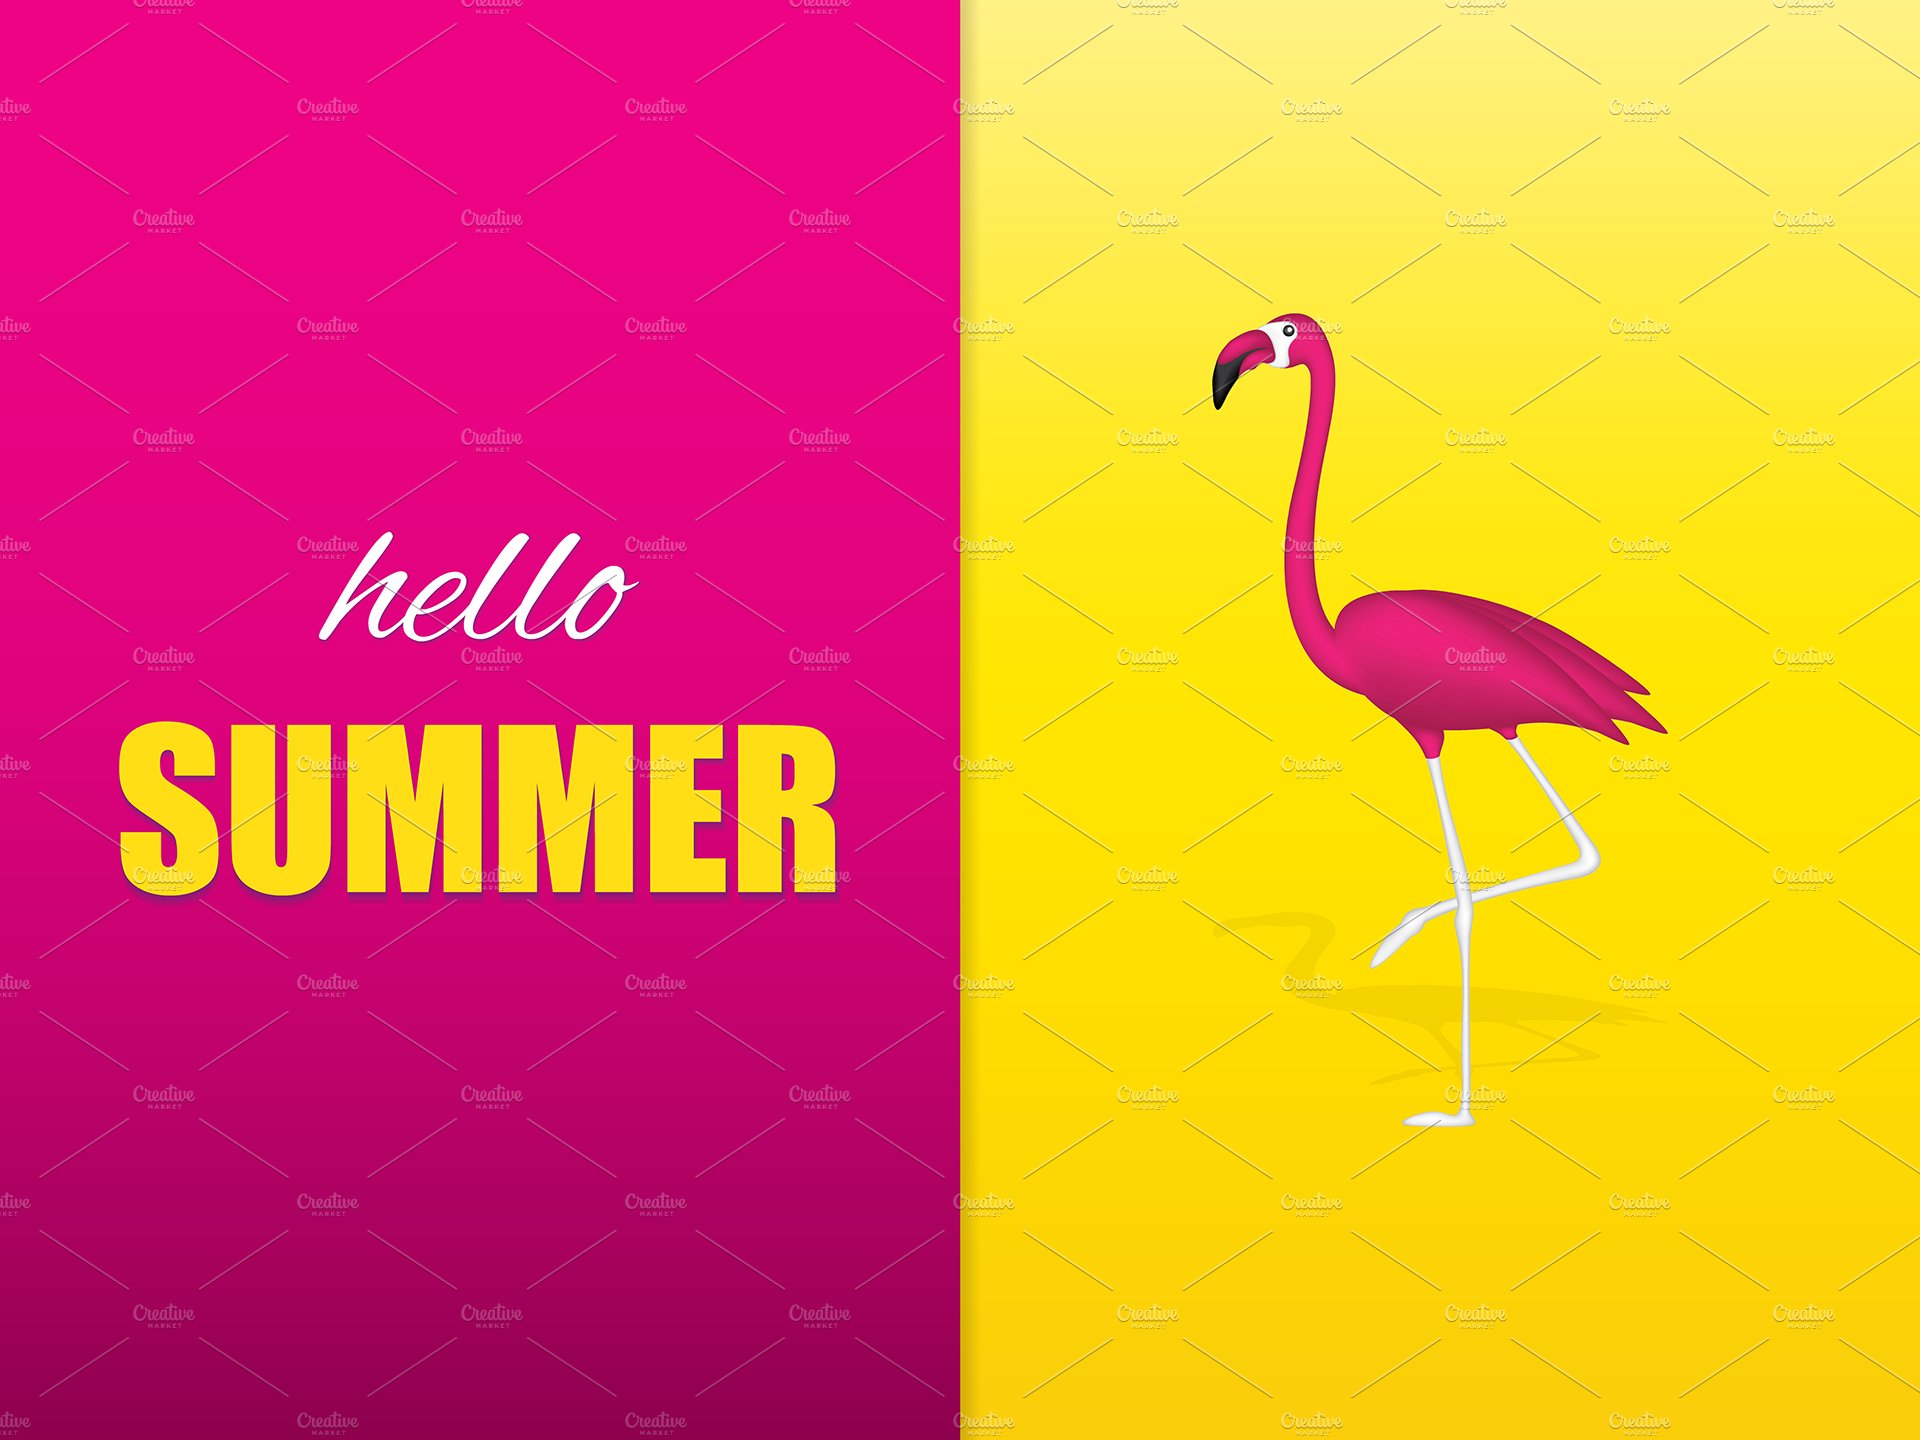 Flamingo cover image.